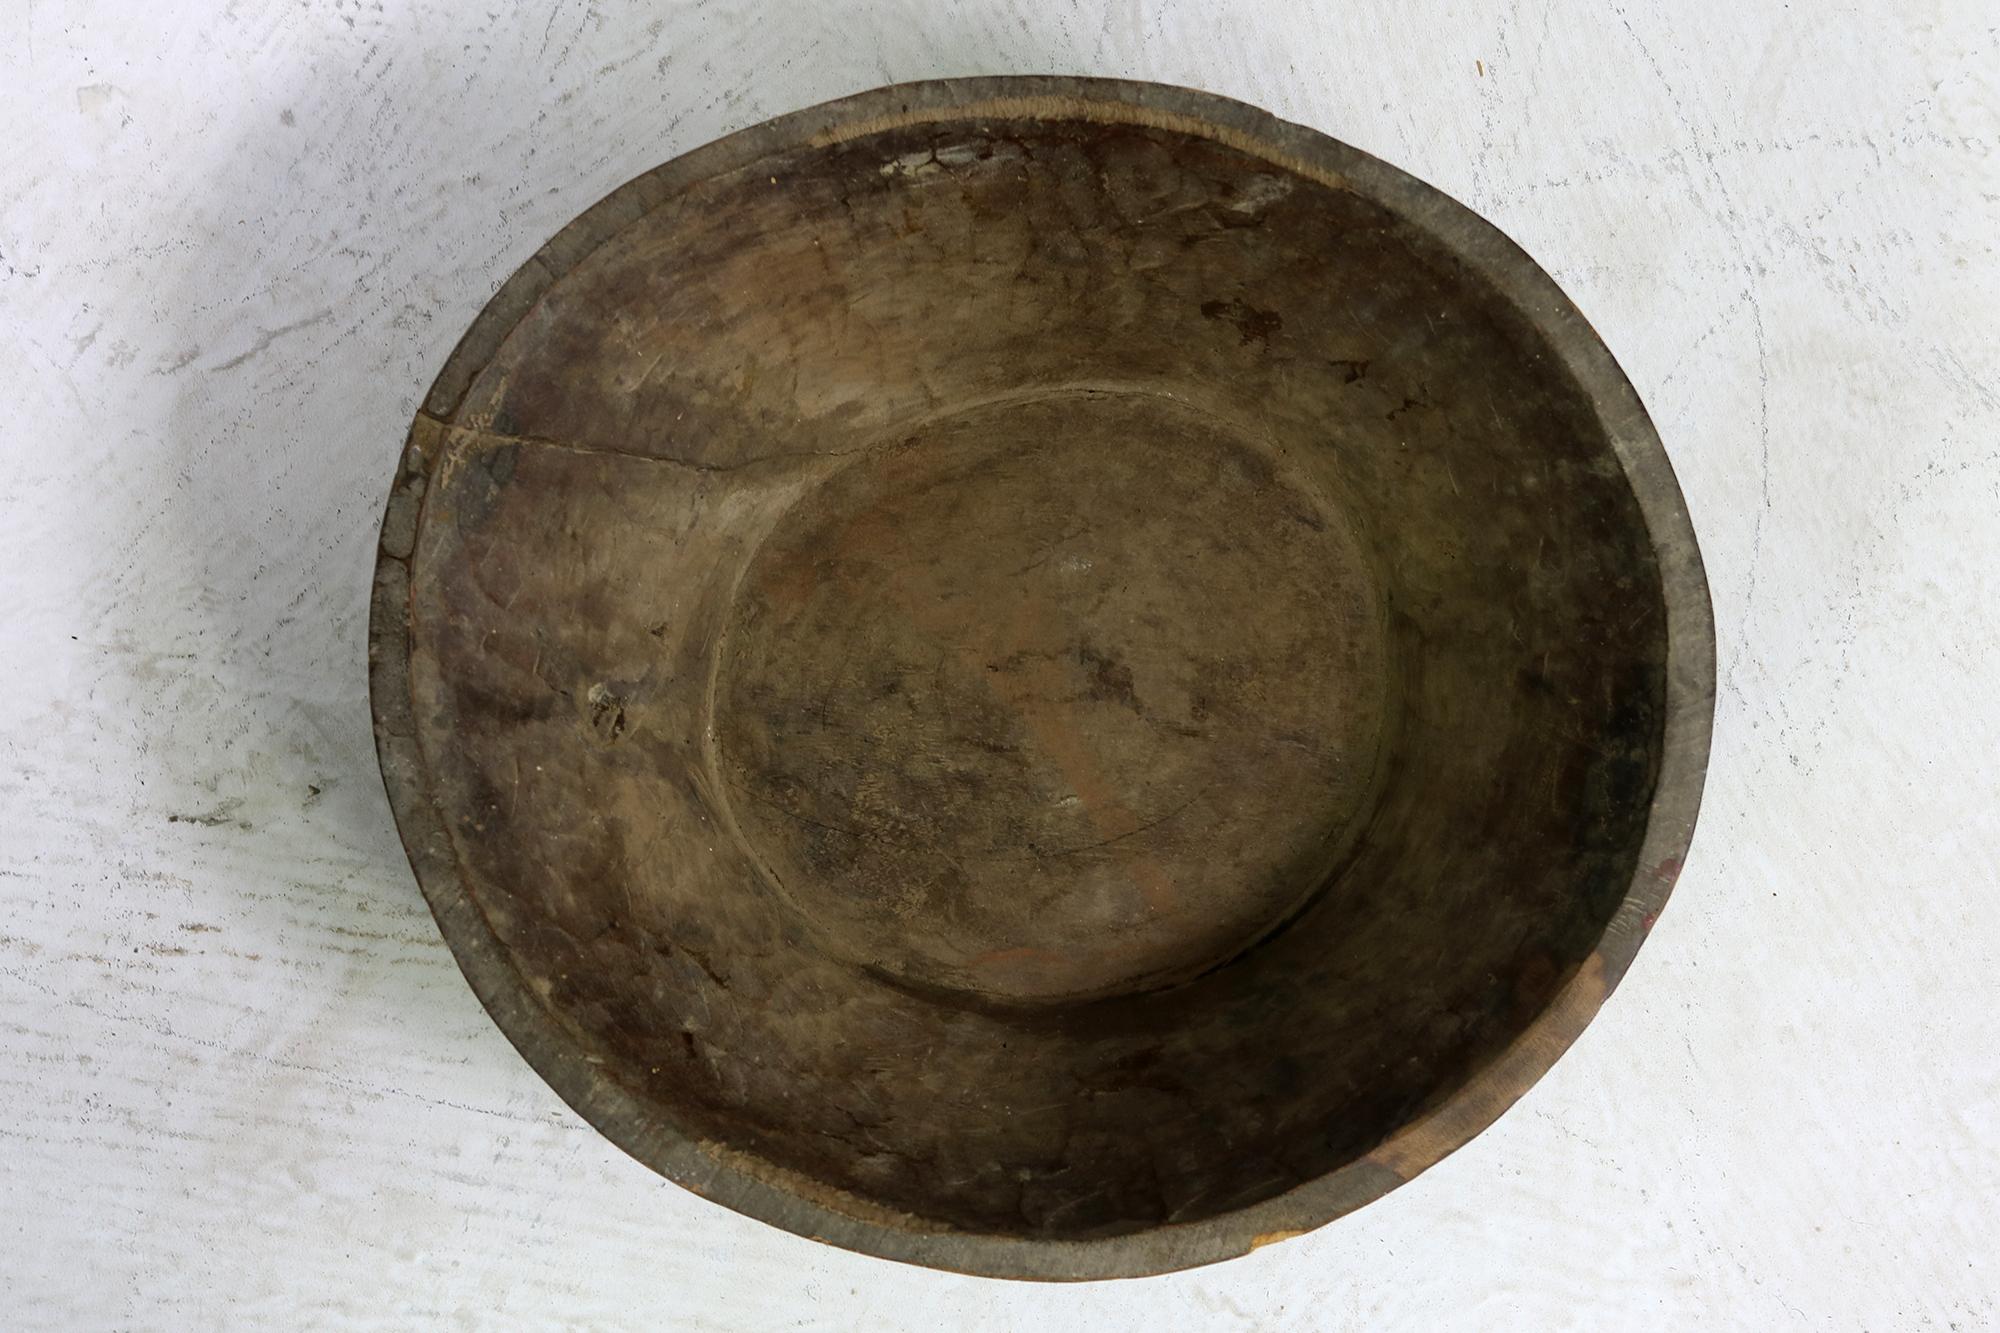 Antique Indian Naga Bowl, Old Solid Wood, Natural Rustic, Wabisabi 2